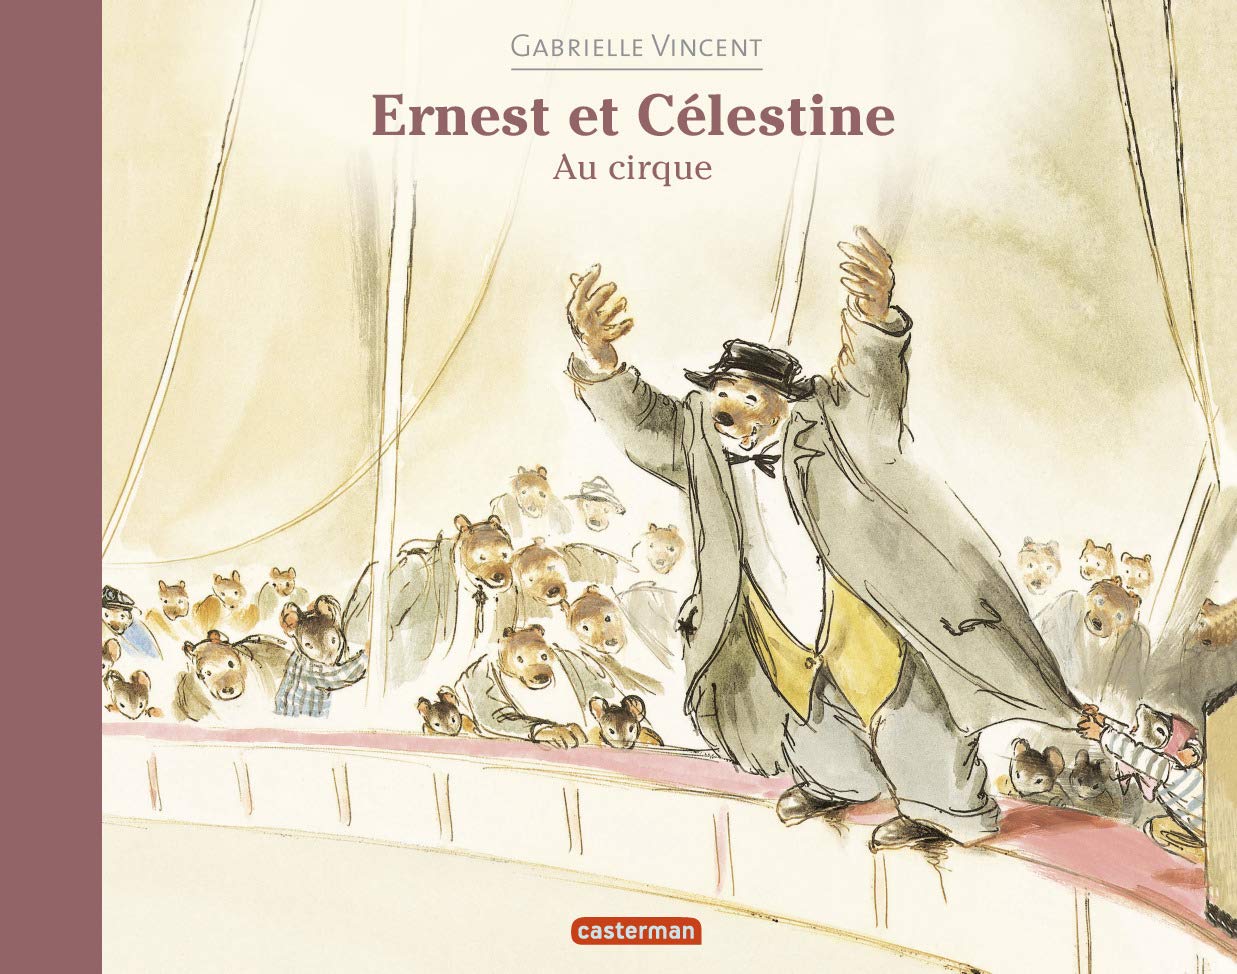 Ernest et Celestine au cirque